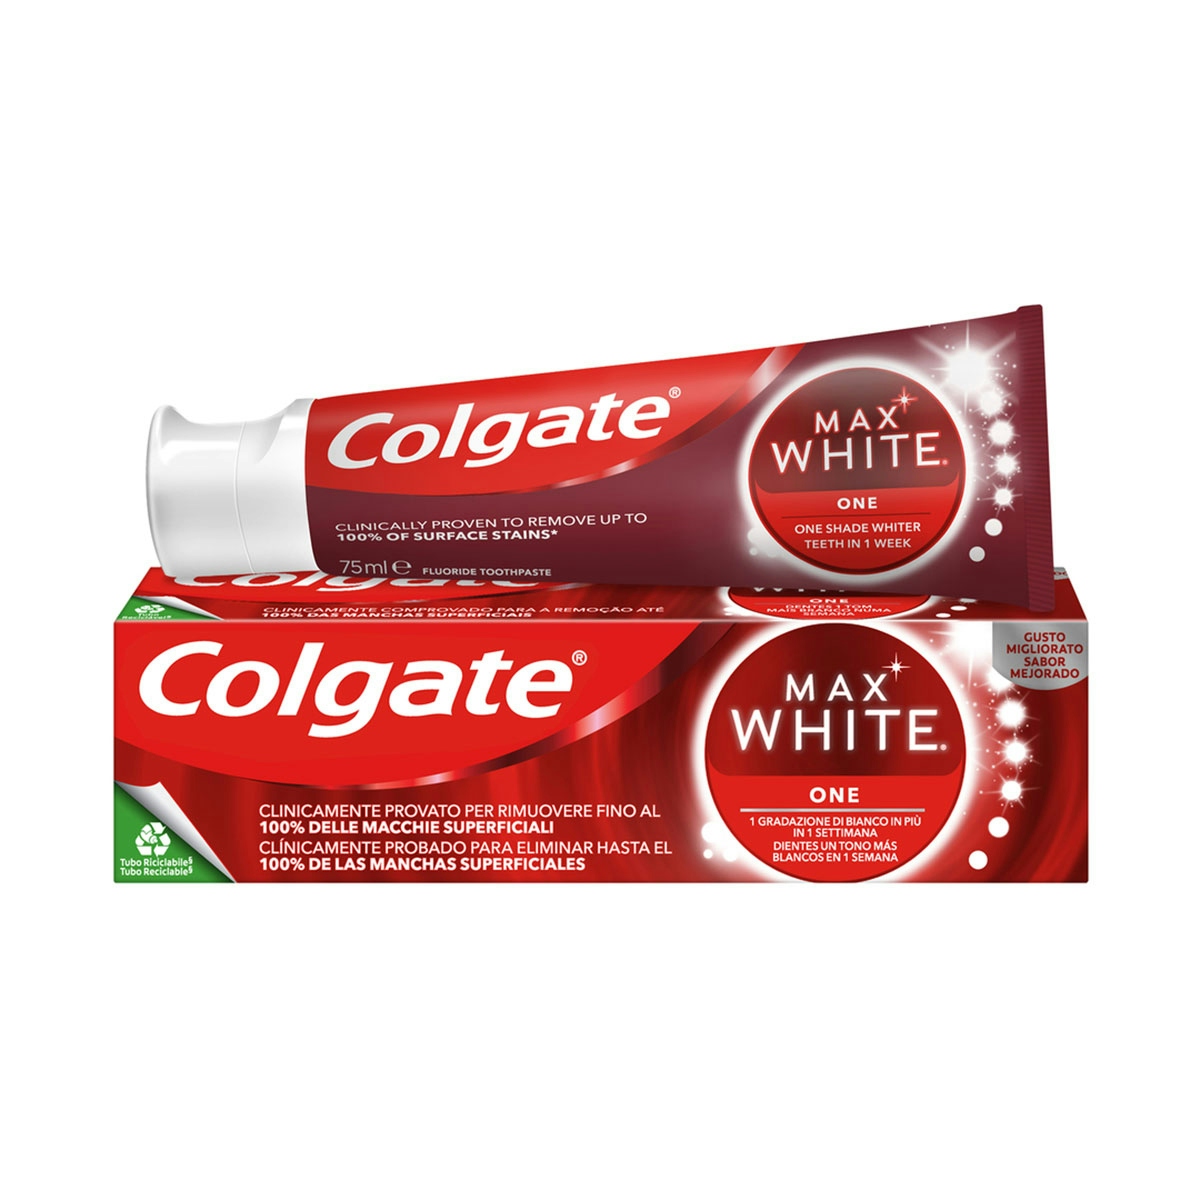 Pasta de dientes blanqueadora Colgate Max White One 75ml